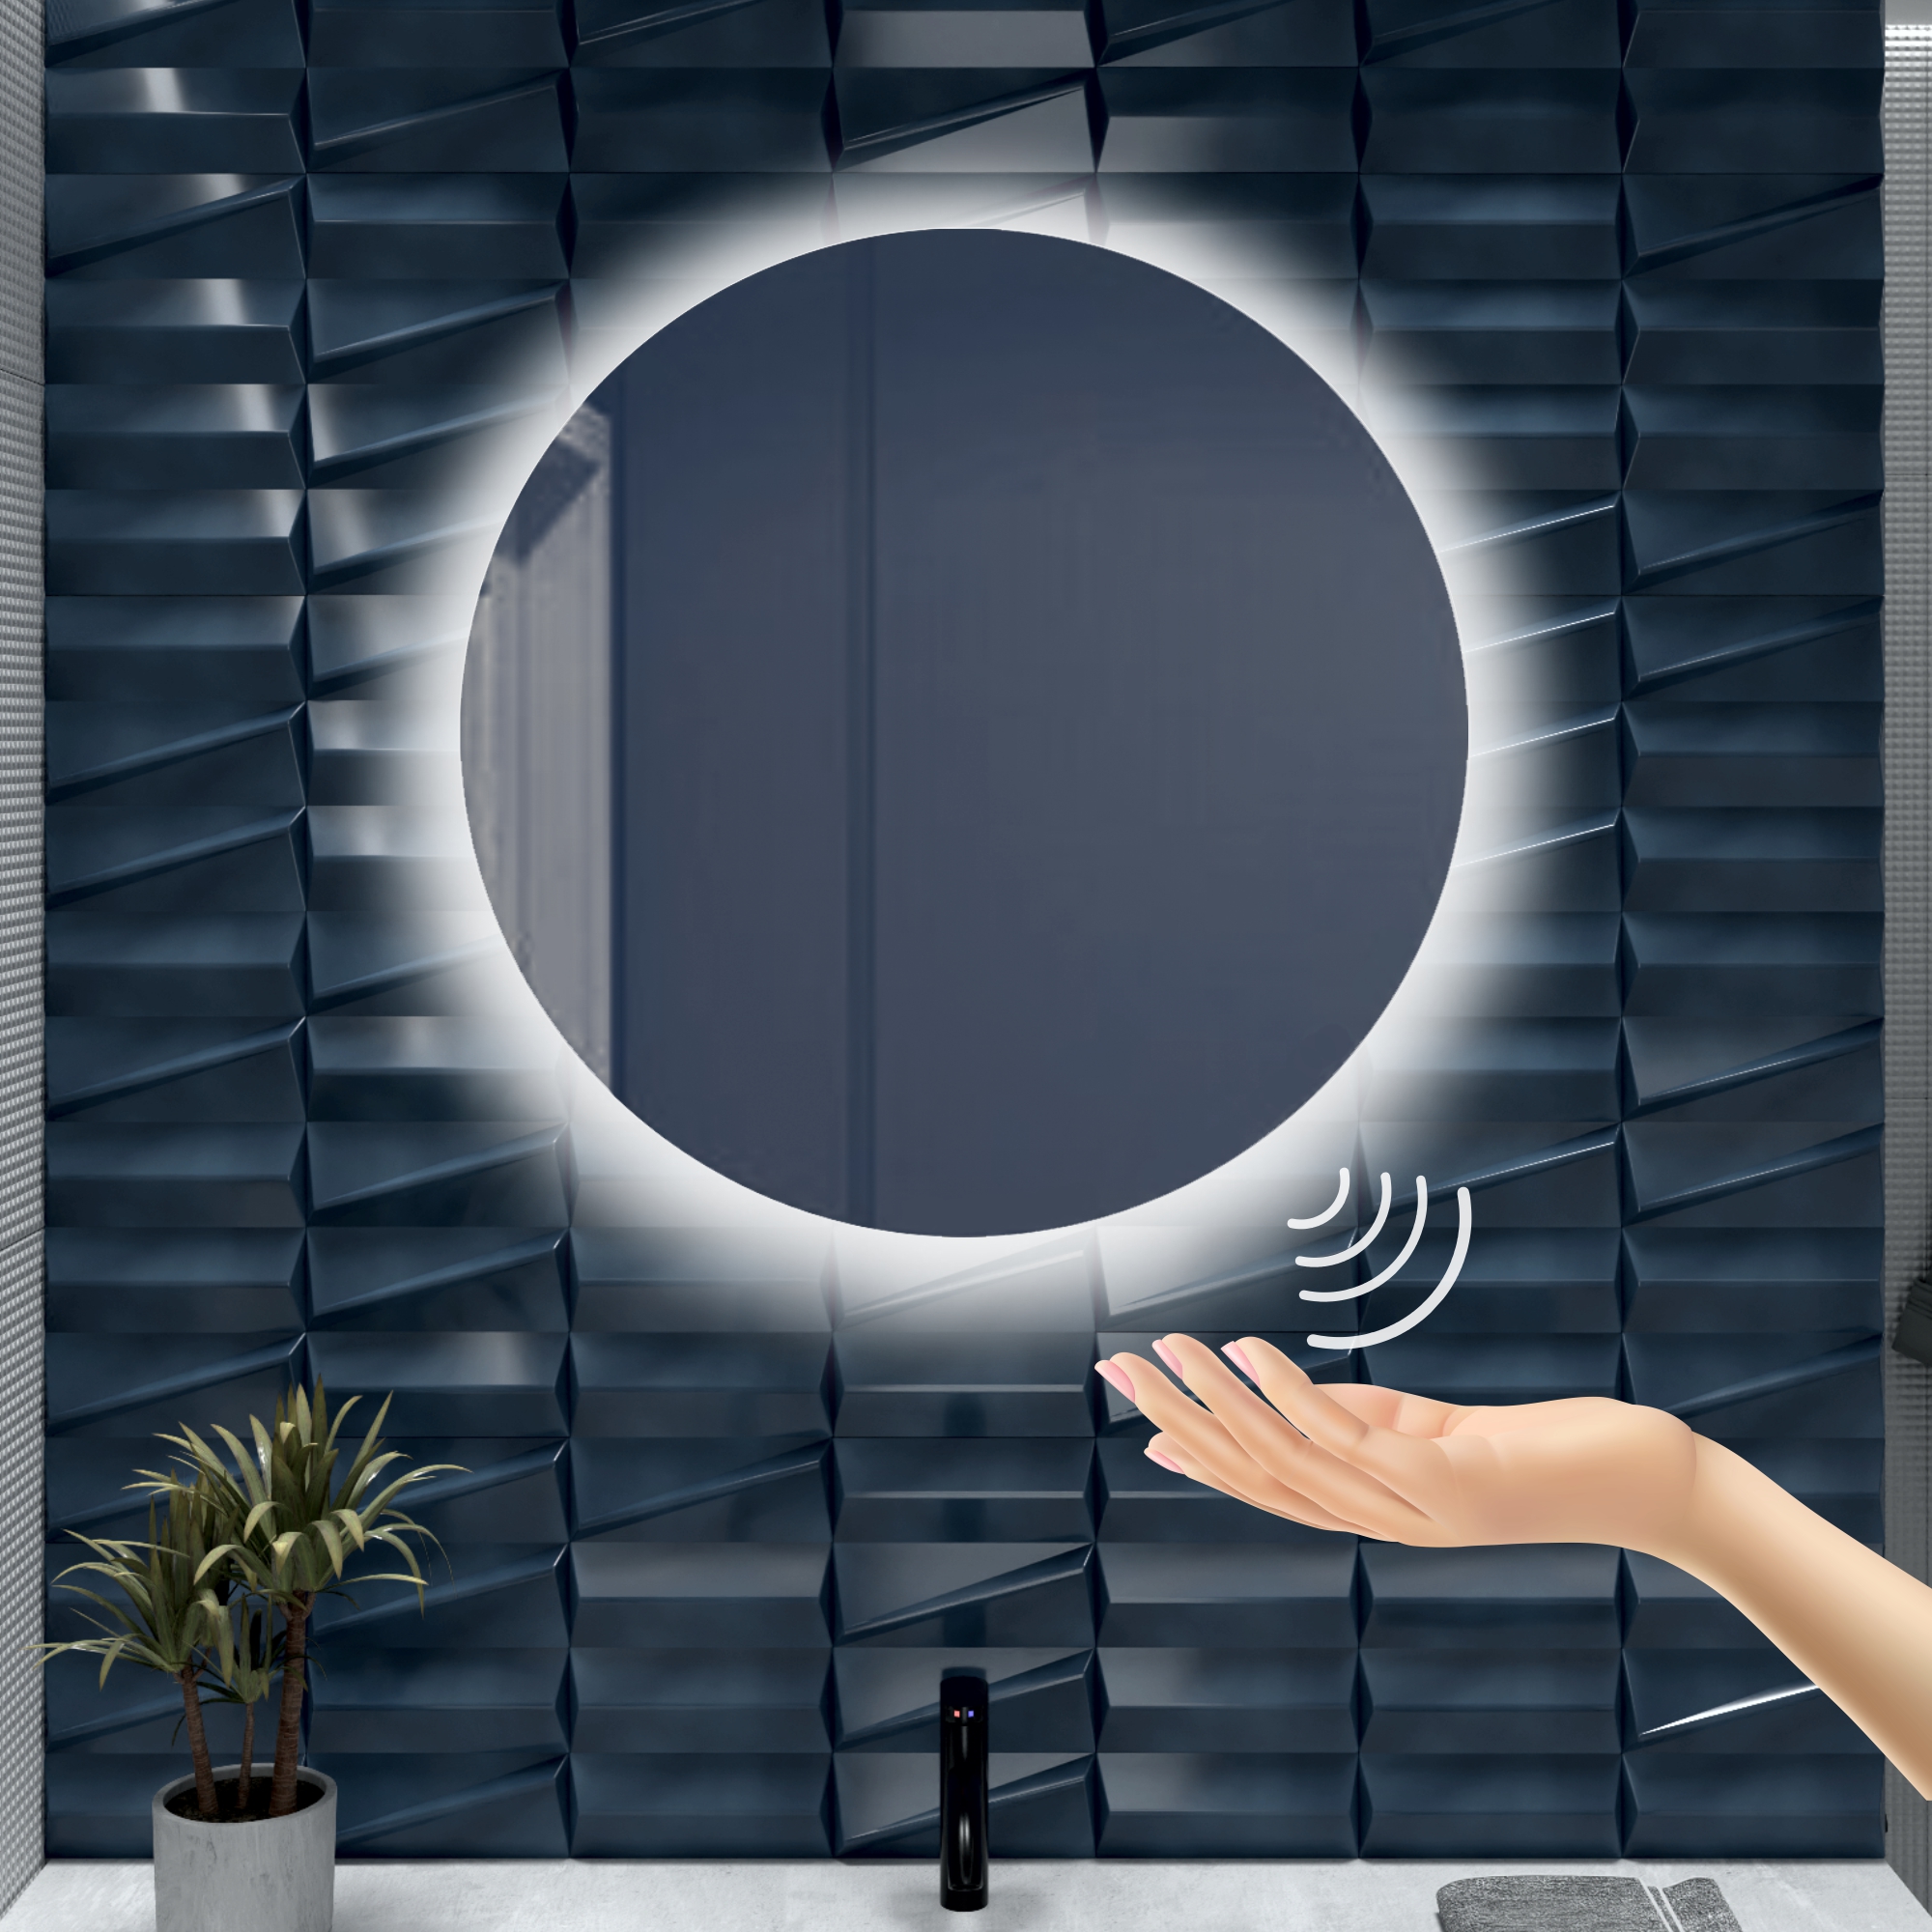 Зеркало для ванной Alfa Mirrors с холодной подсветкой 6500К круглое 80см, арт. Na-8Vzh зеркало с подсветкой настенное круглое silver mirrors fantom 77 см с bluetooth